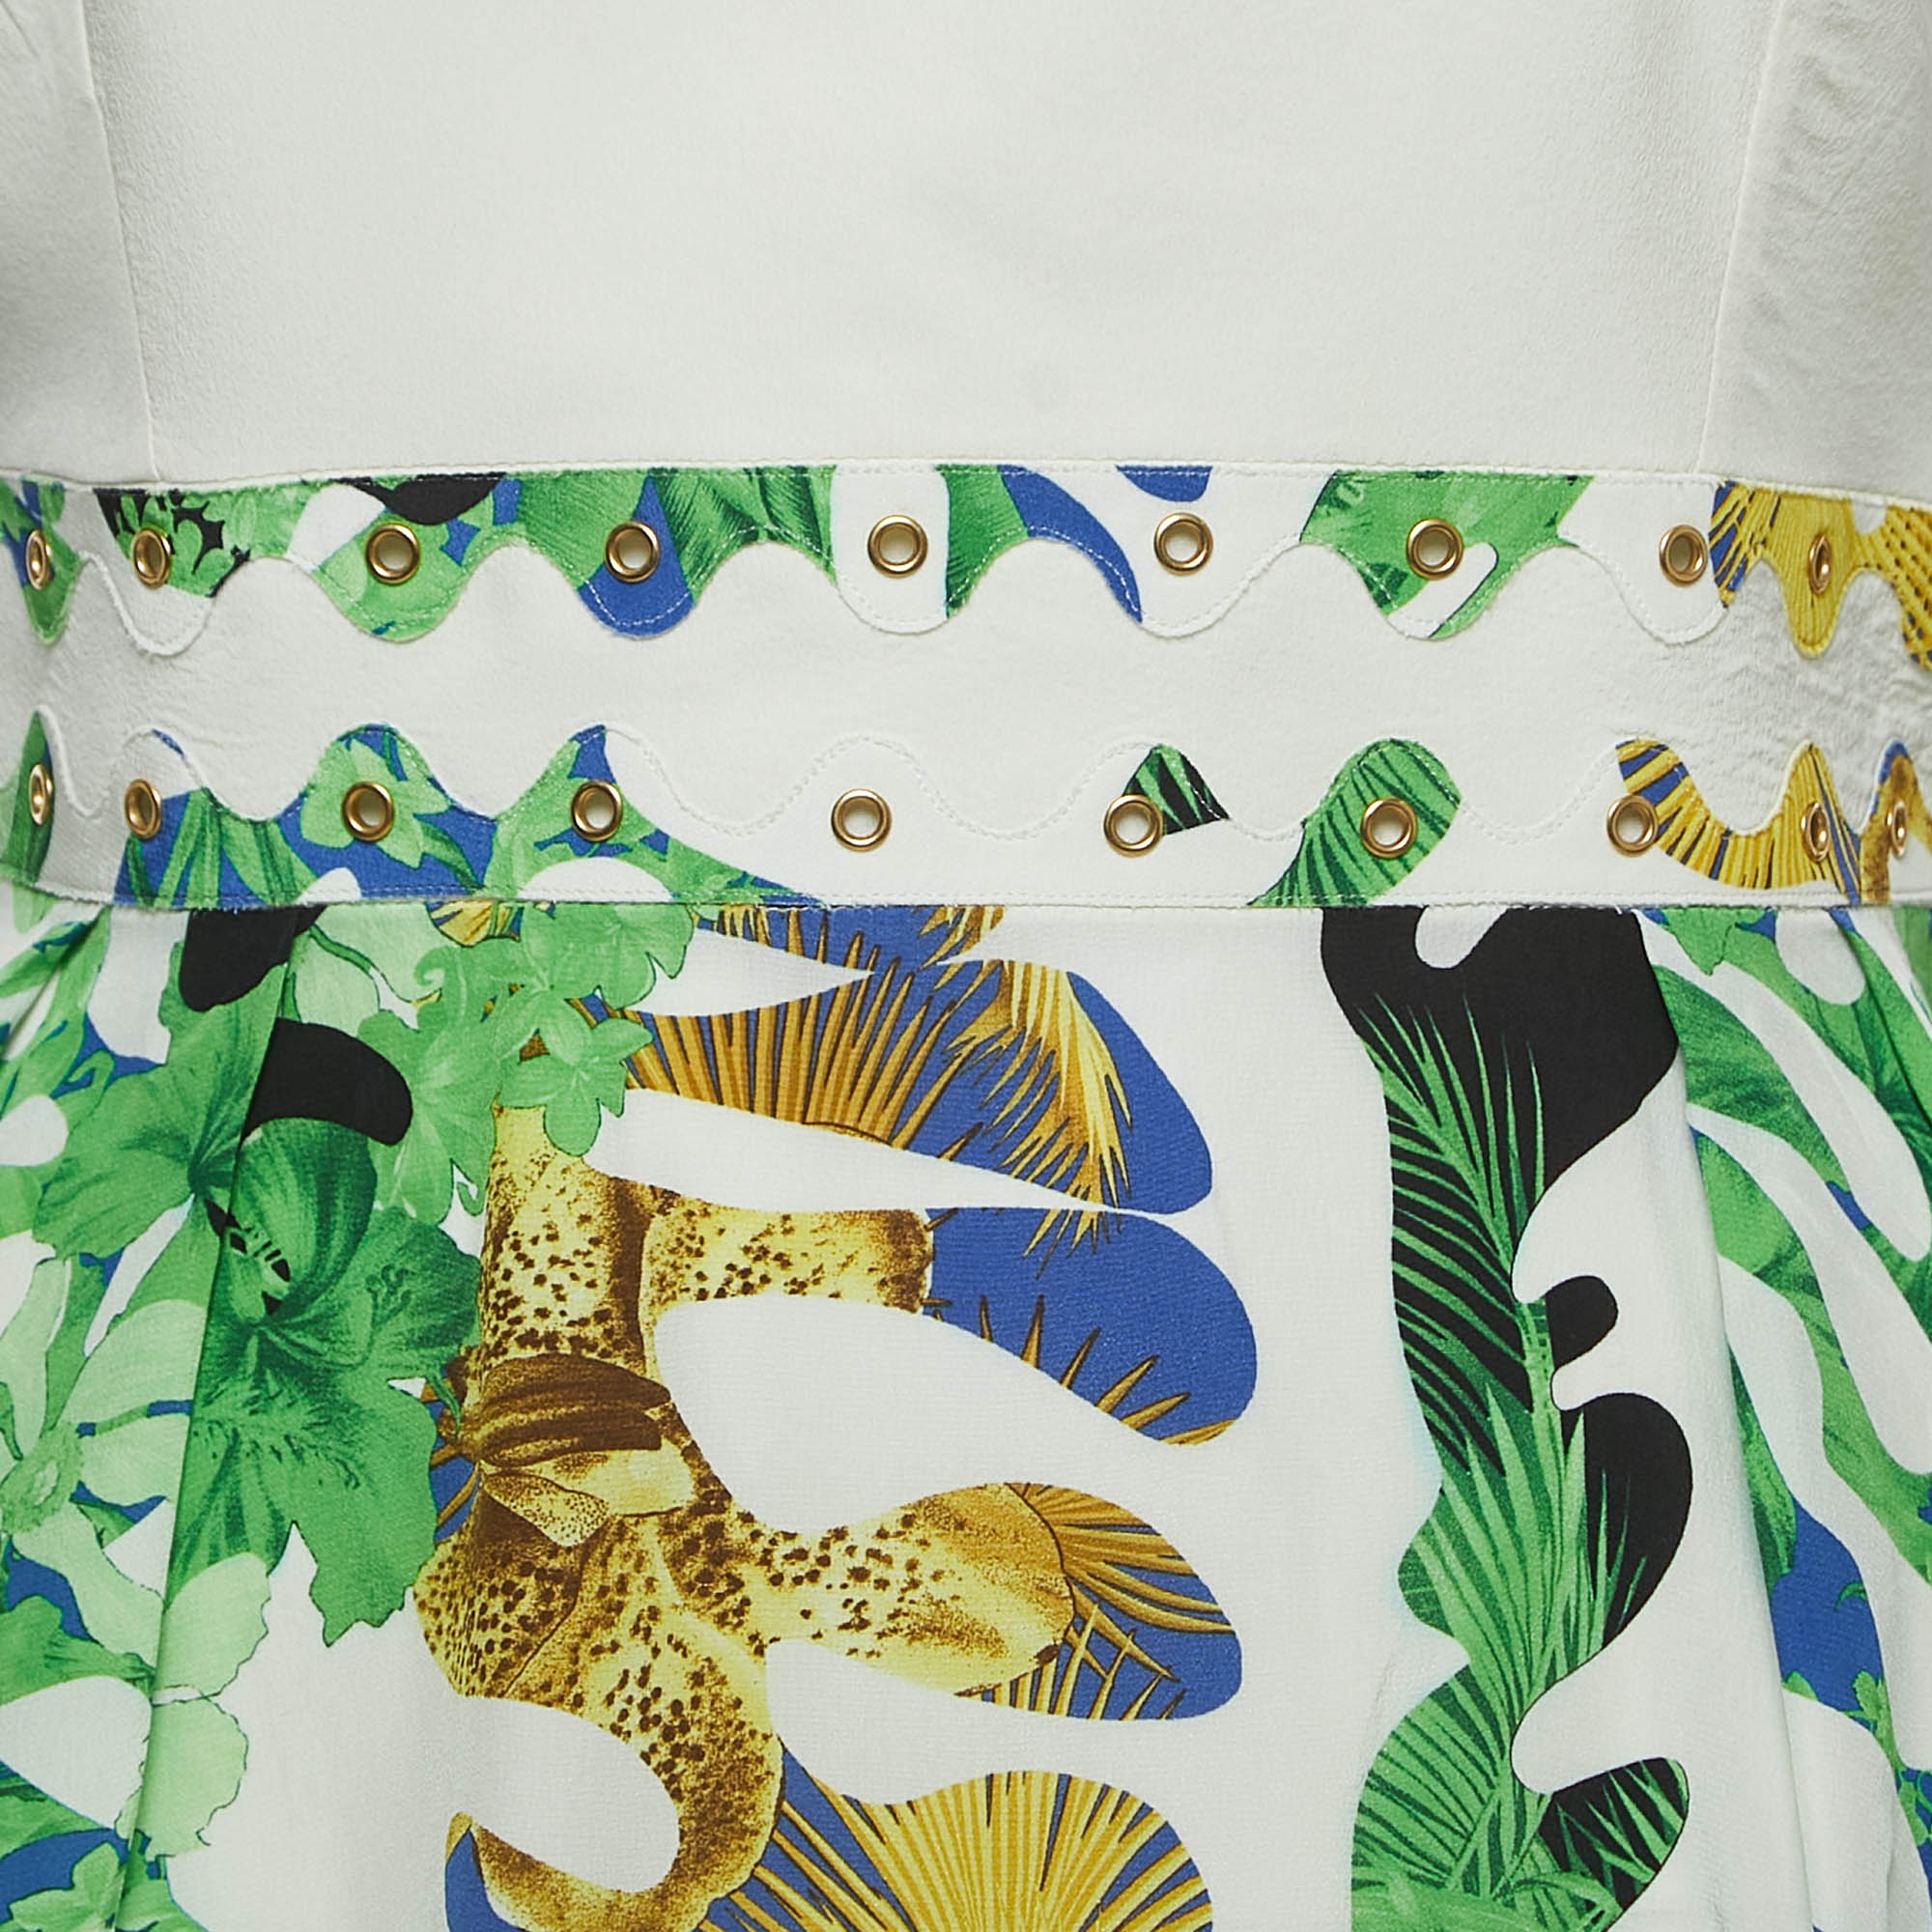 Versace Multicolor Print Silk Sleeveless Asymmetrical Short Dress M